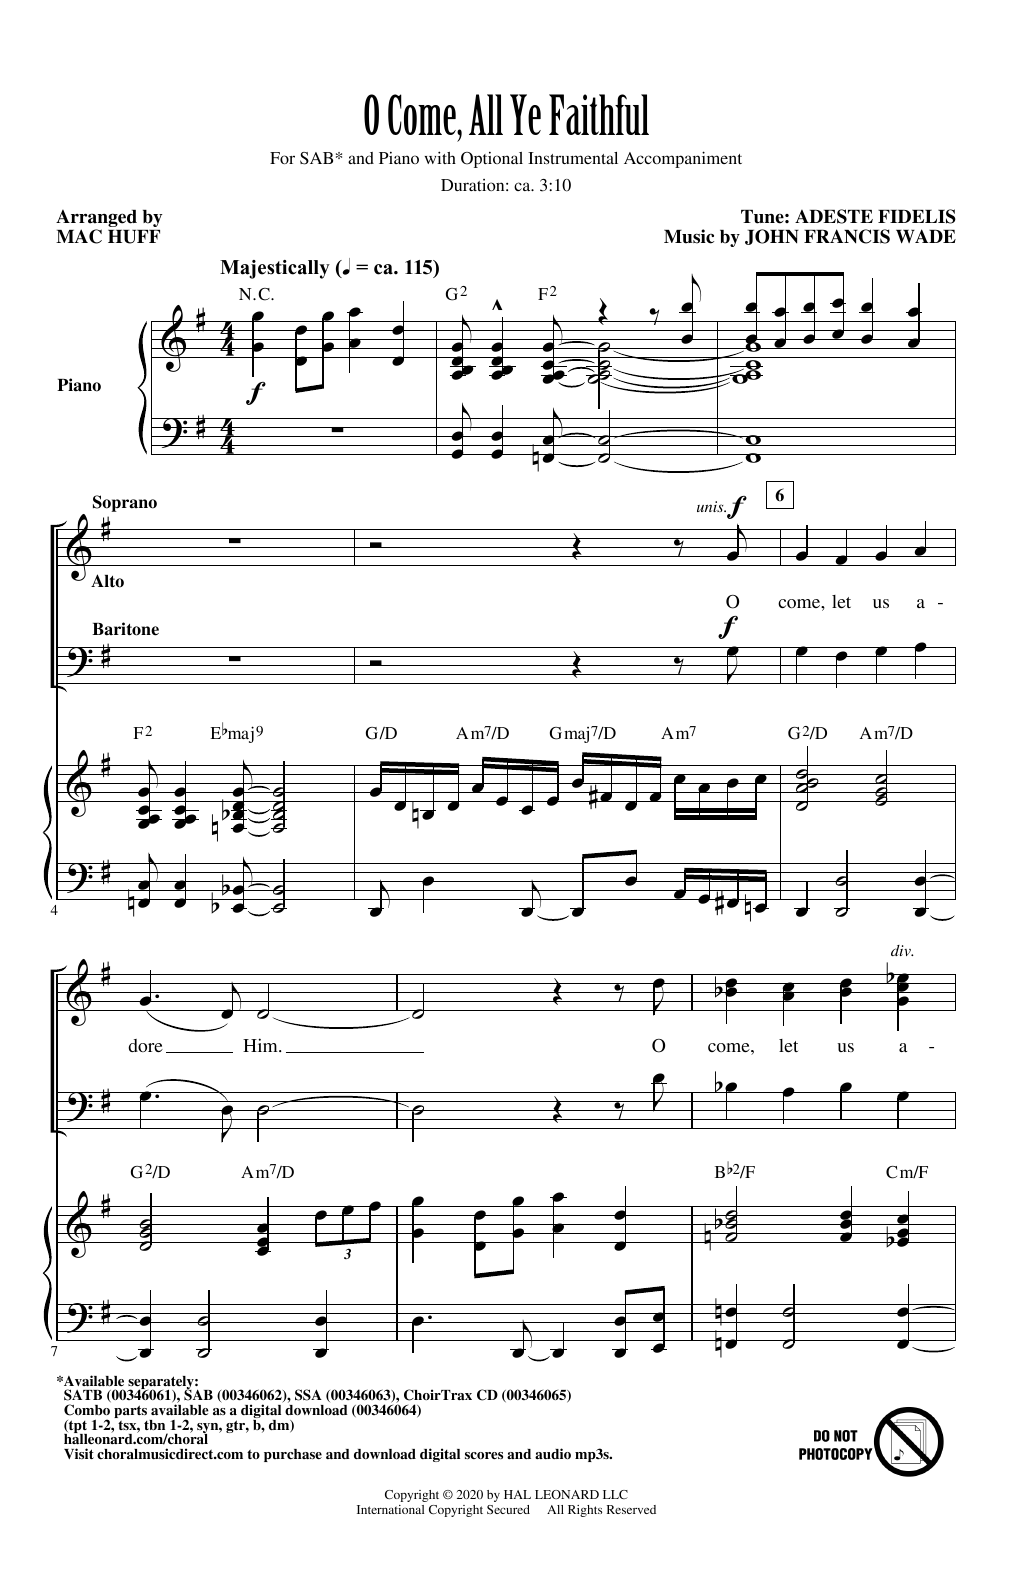 John Francis Wade O Come, All Ye Faithful (arr. Mac Huff) Sheet Music Notes & Chords for SATB Choir - Download or Print PDF